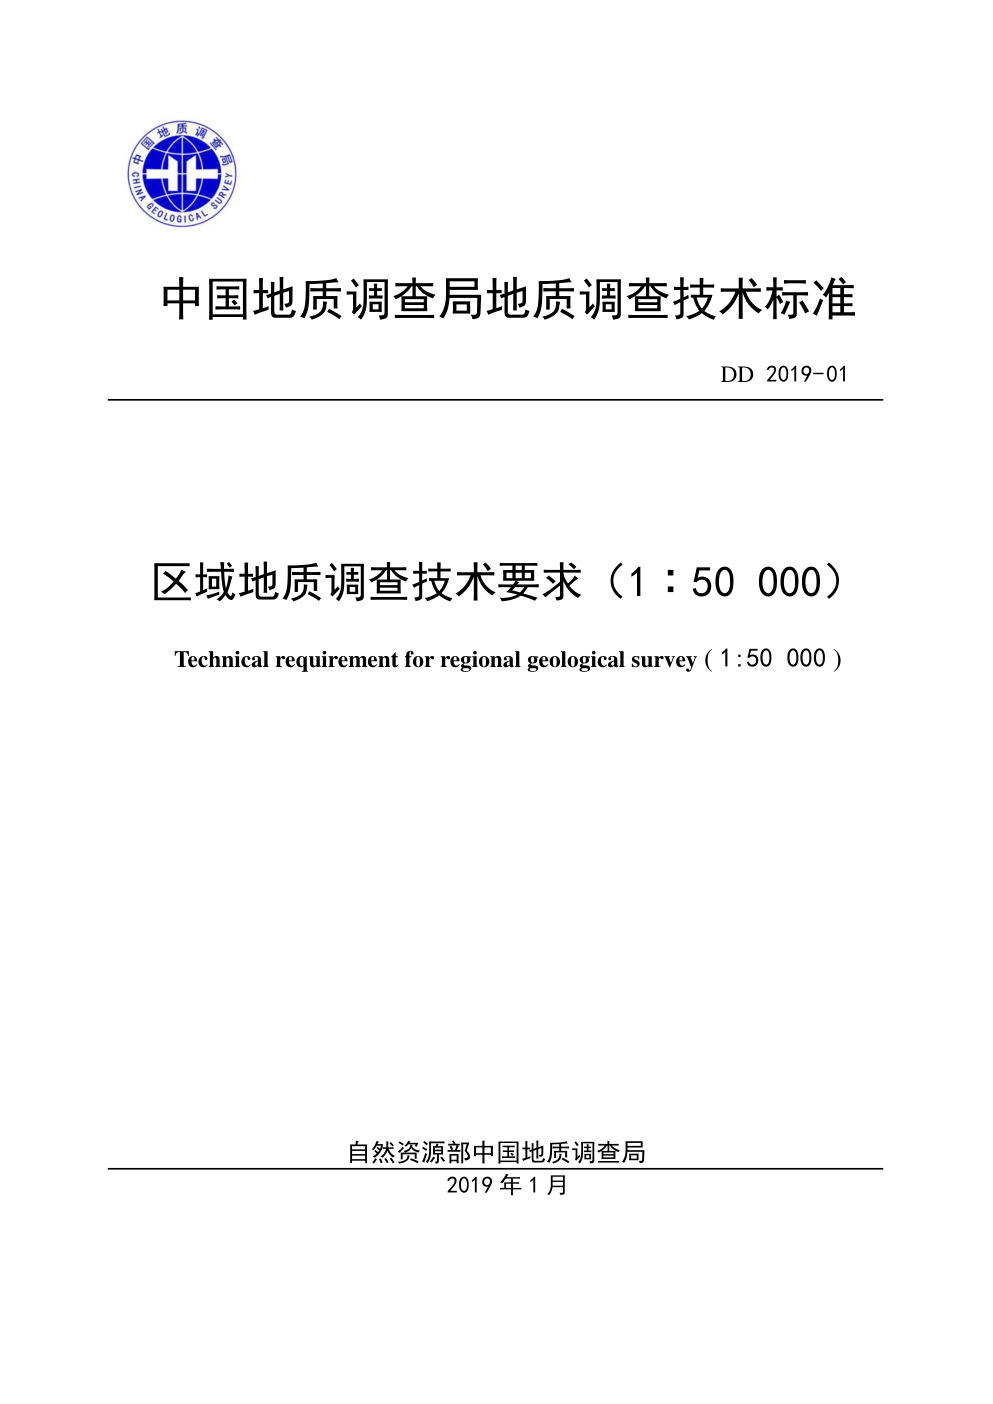 DD 2019-01 区域地质调查技术要求（1∶50 000）-0